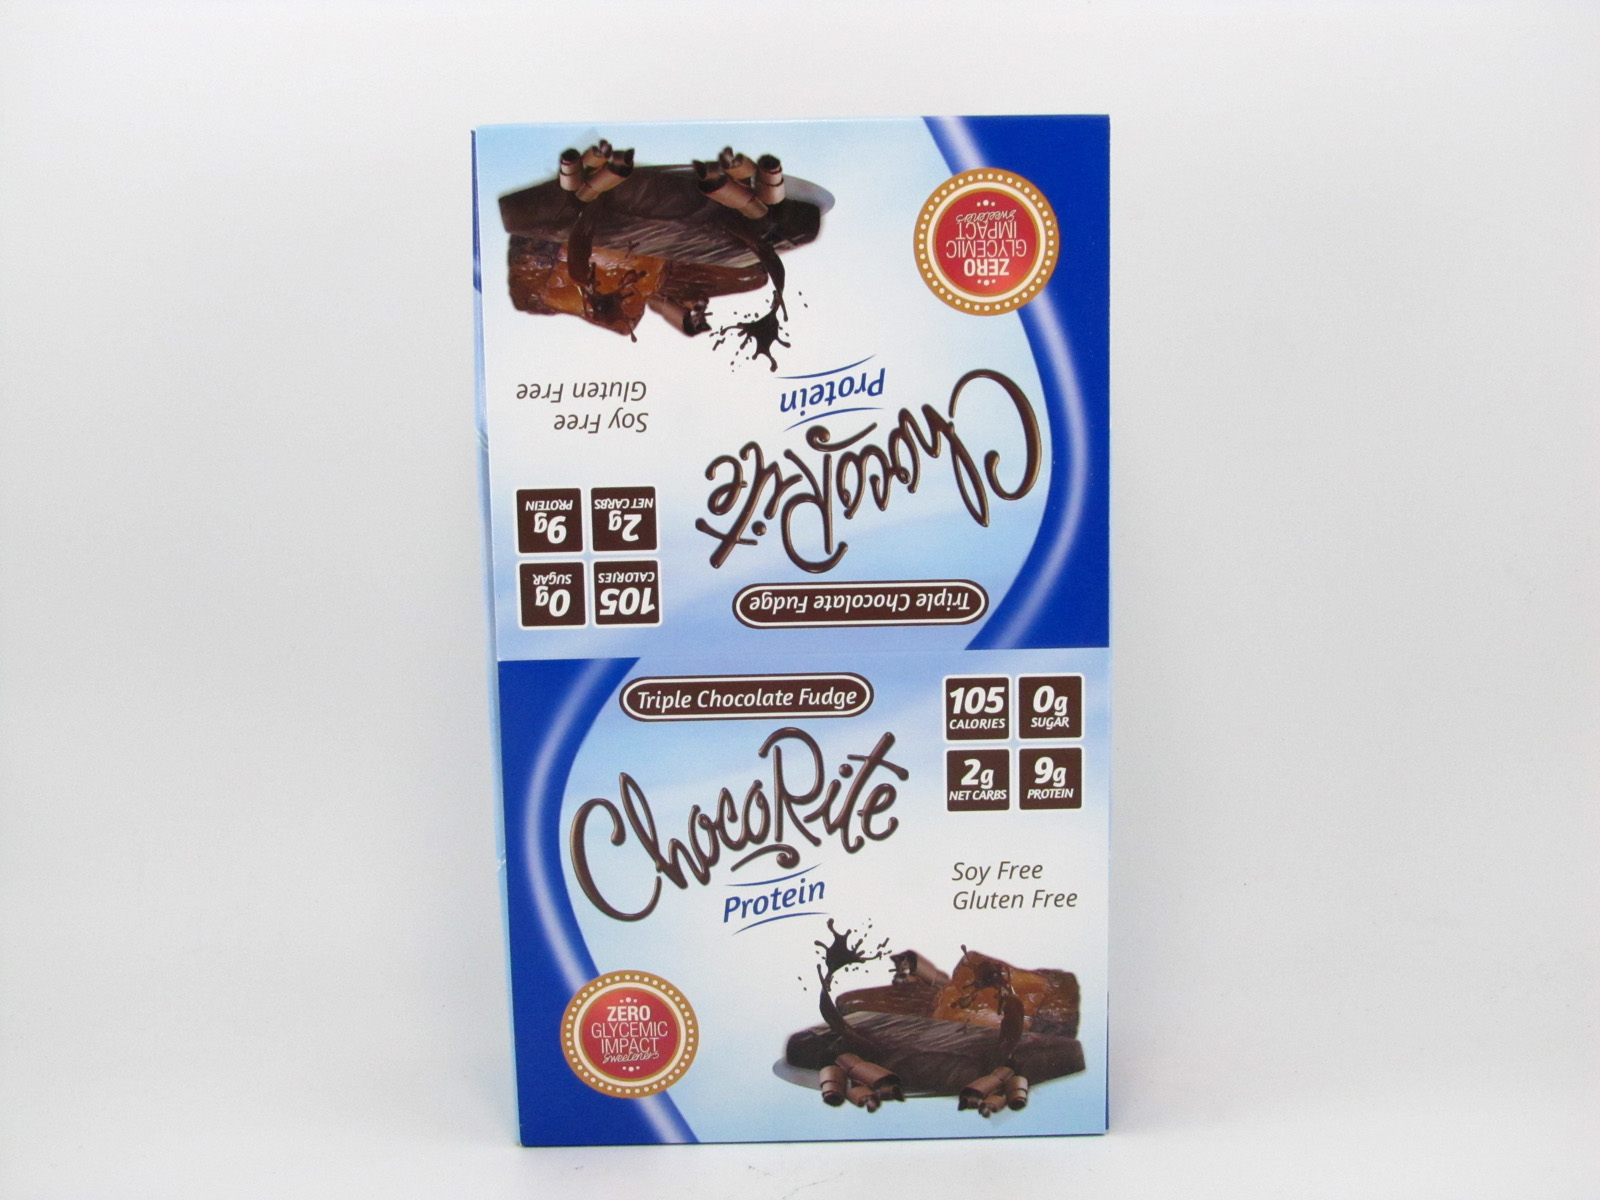 Chocorite Protein Bar ( 34g)- Triple Chocolate Fudge Box of 16 - front view